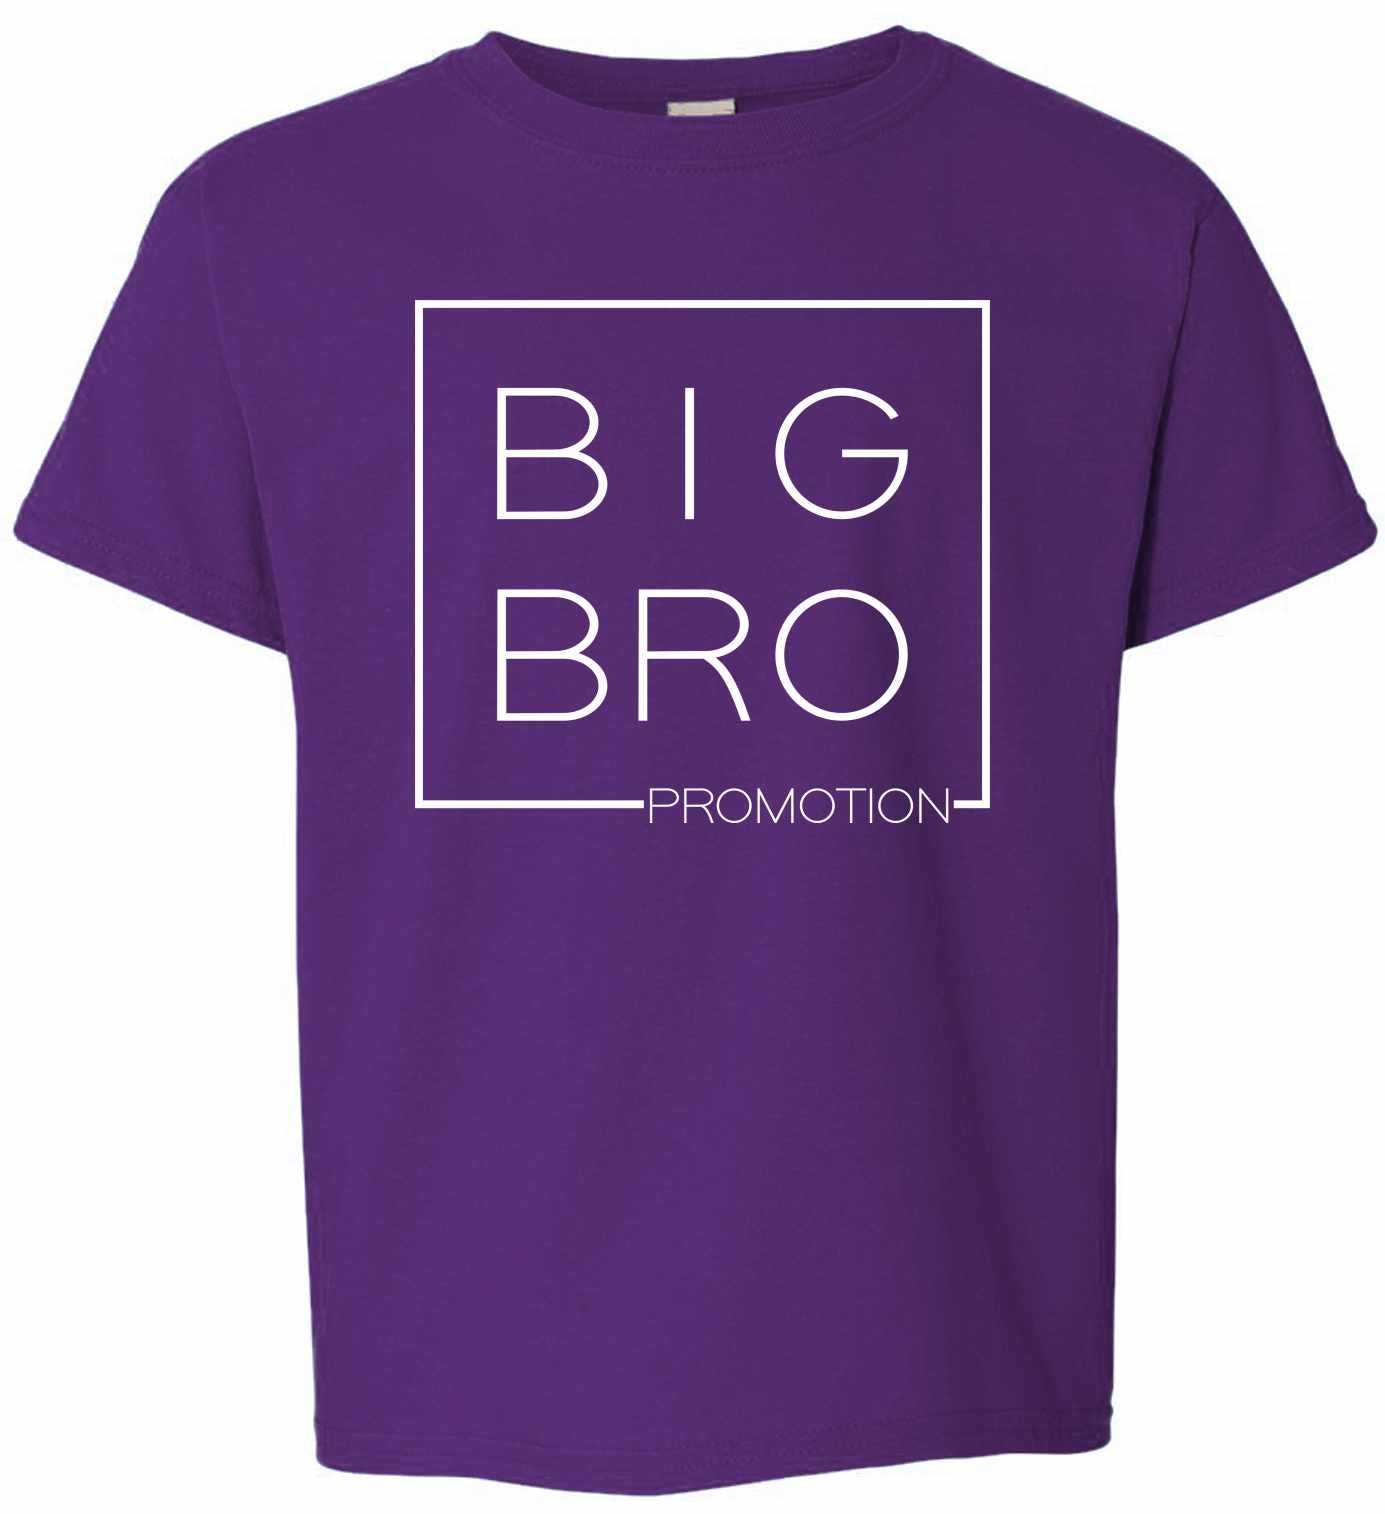 Big Bro Promotion - Big Brother - Box on Kids T-Shirt (#1330-201)